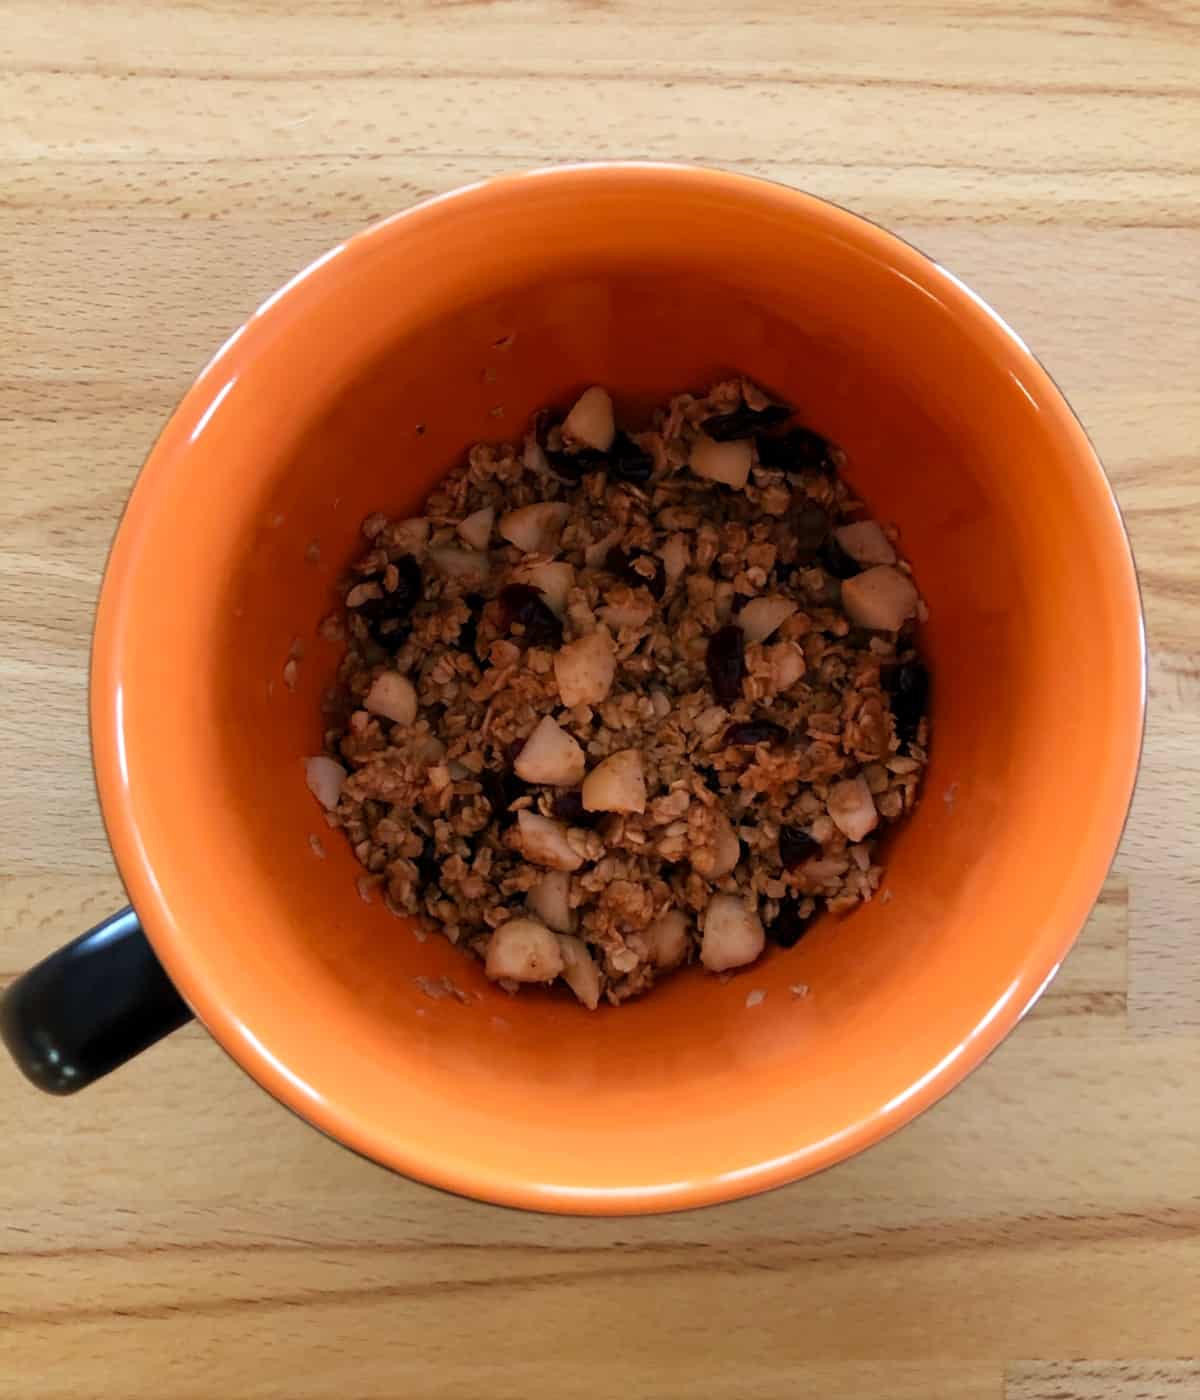 Macadamia Nut Microwave Granola in orange mug from above.